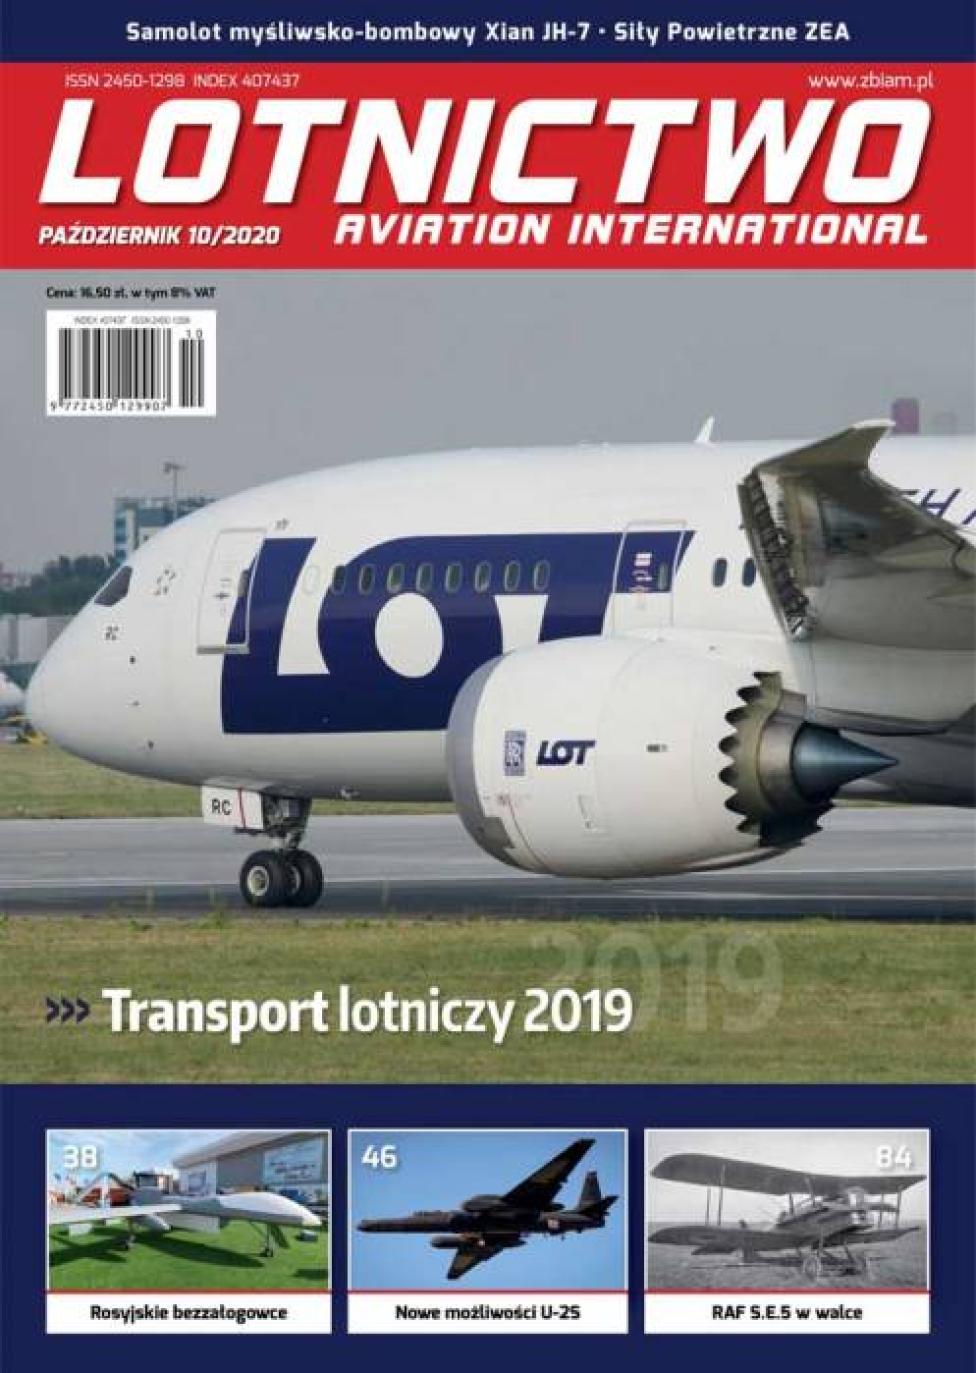 Lotnictwo Aviation International 10/2020